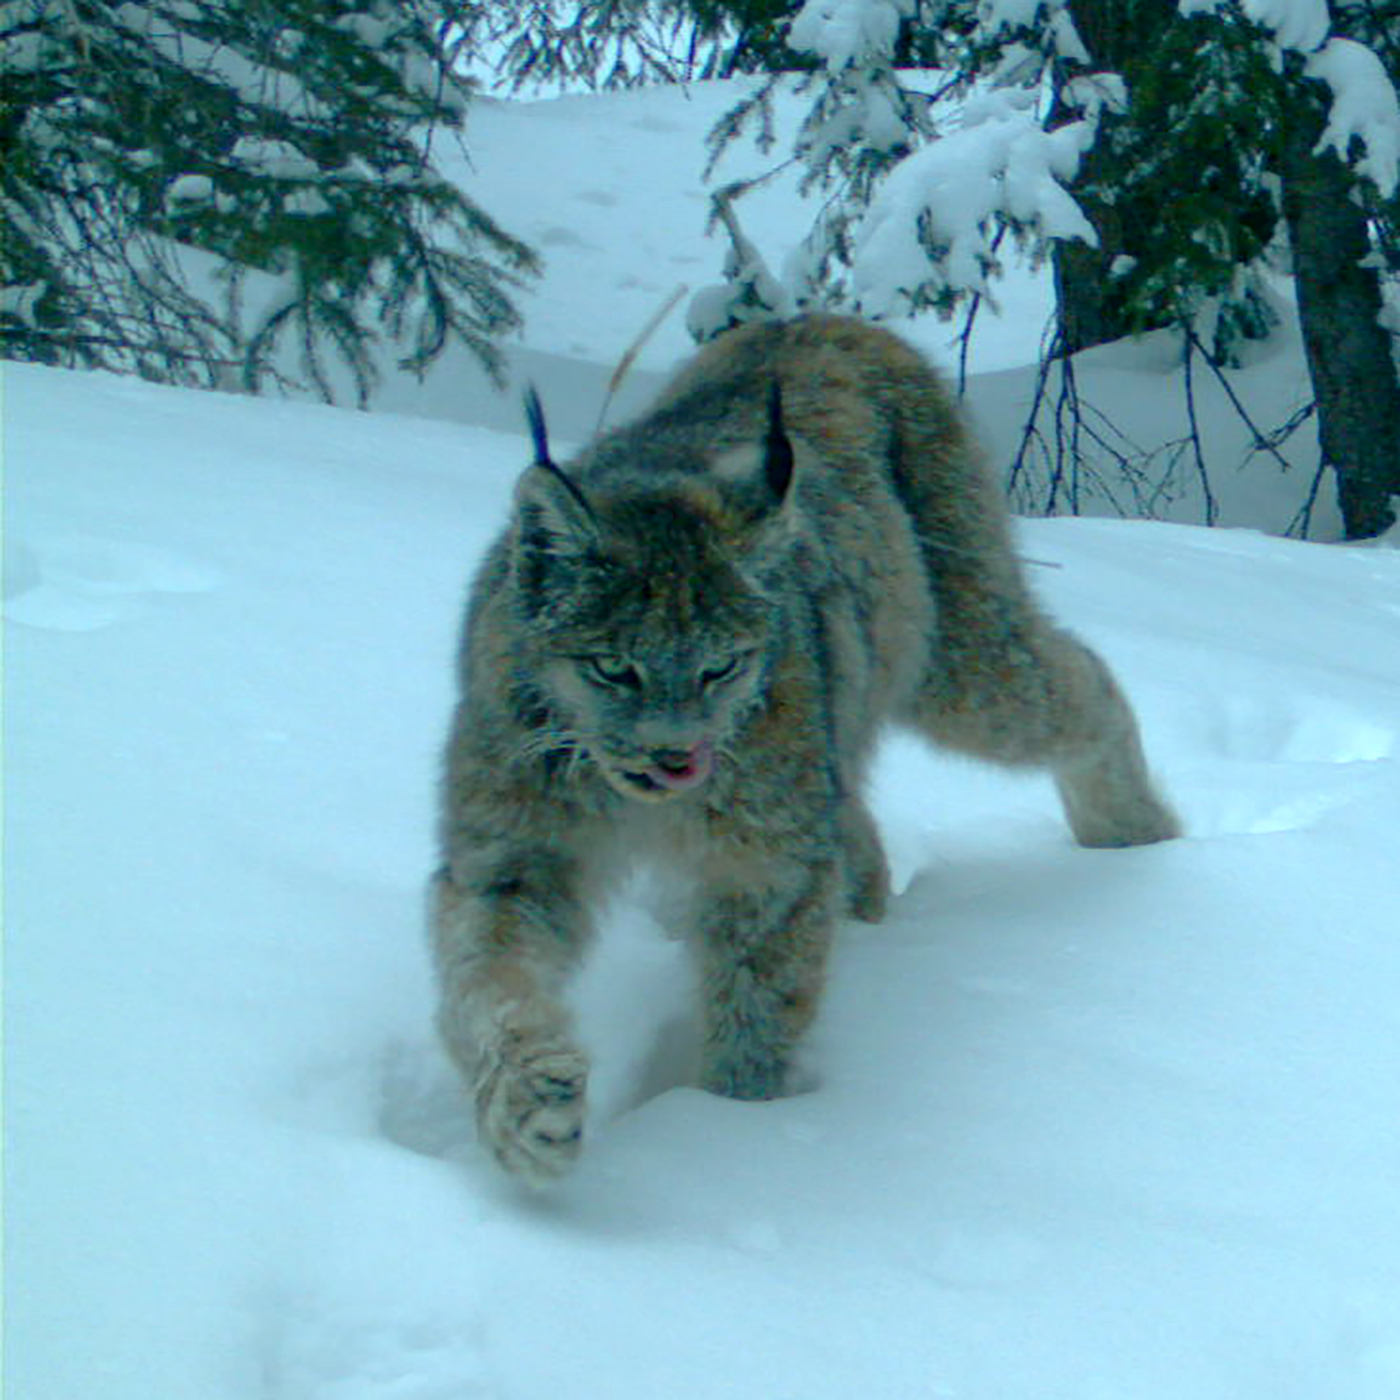 S1E4: 1.4 - Revisiting the lynx reintroduction in Colorado - Dec. 11, 2020